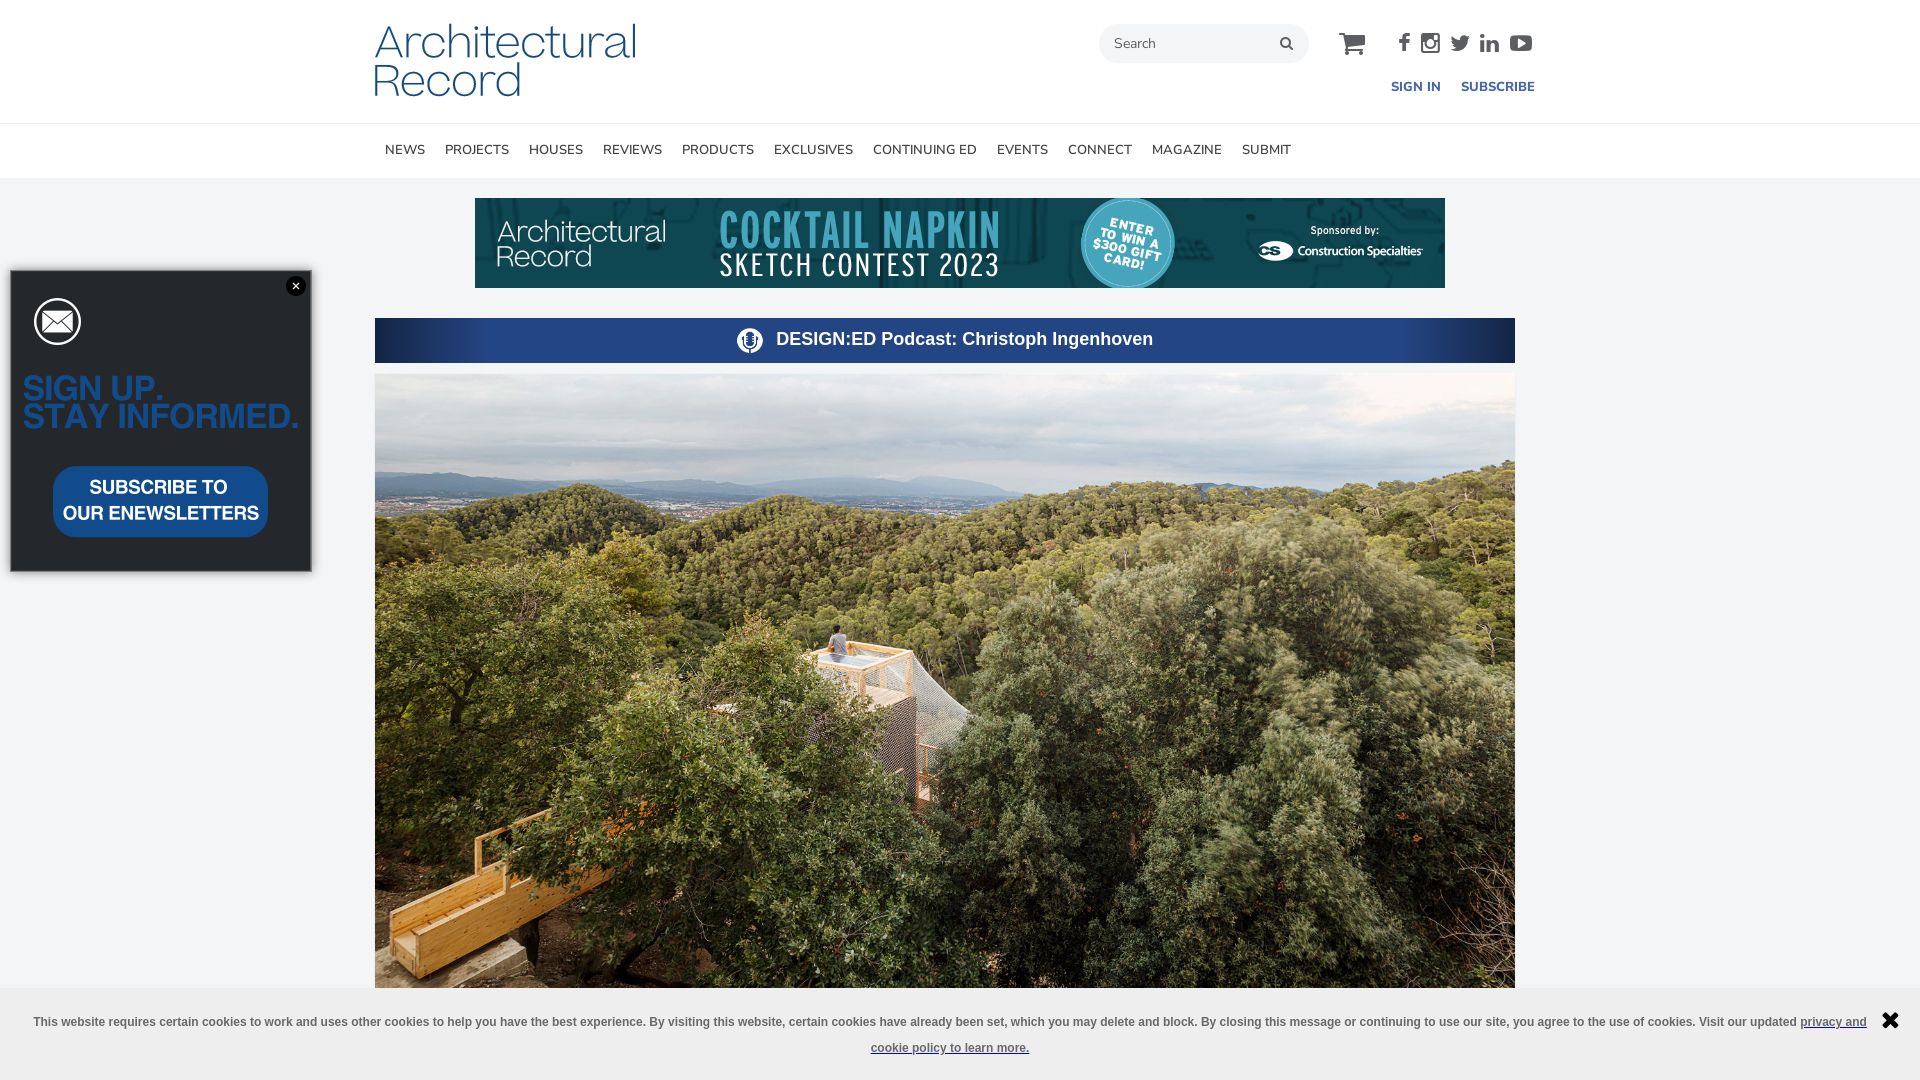 Website status architecturalrecord.com is   ONLINE